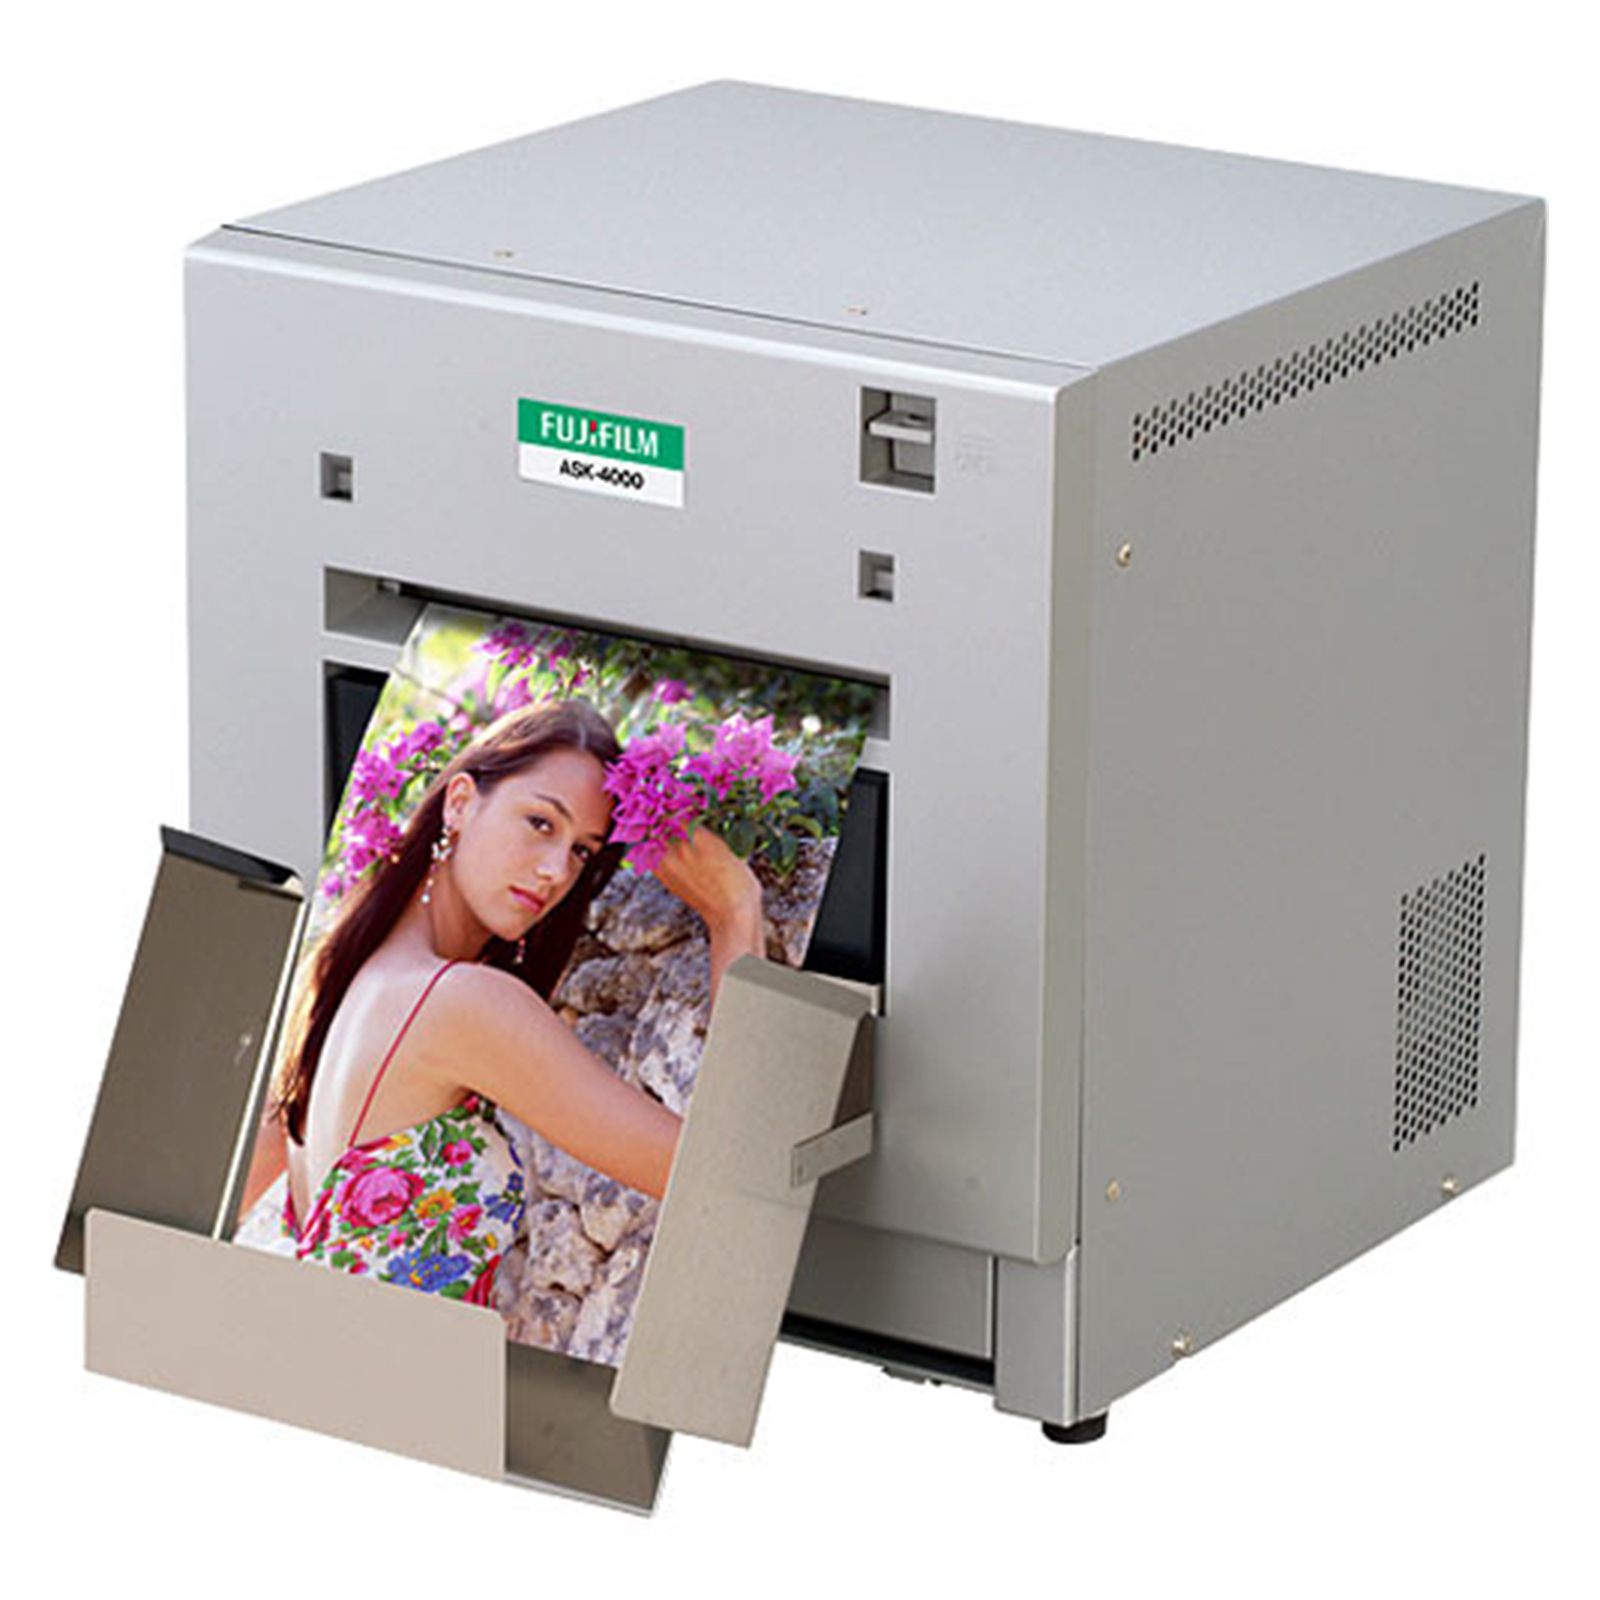 Image of Fujifilm ASK400 Dye Sub Printer